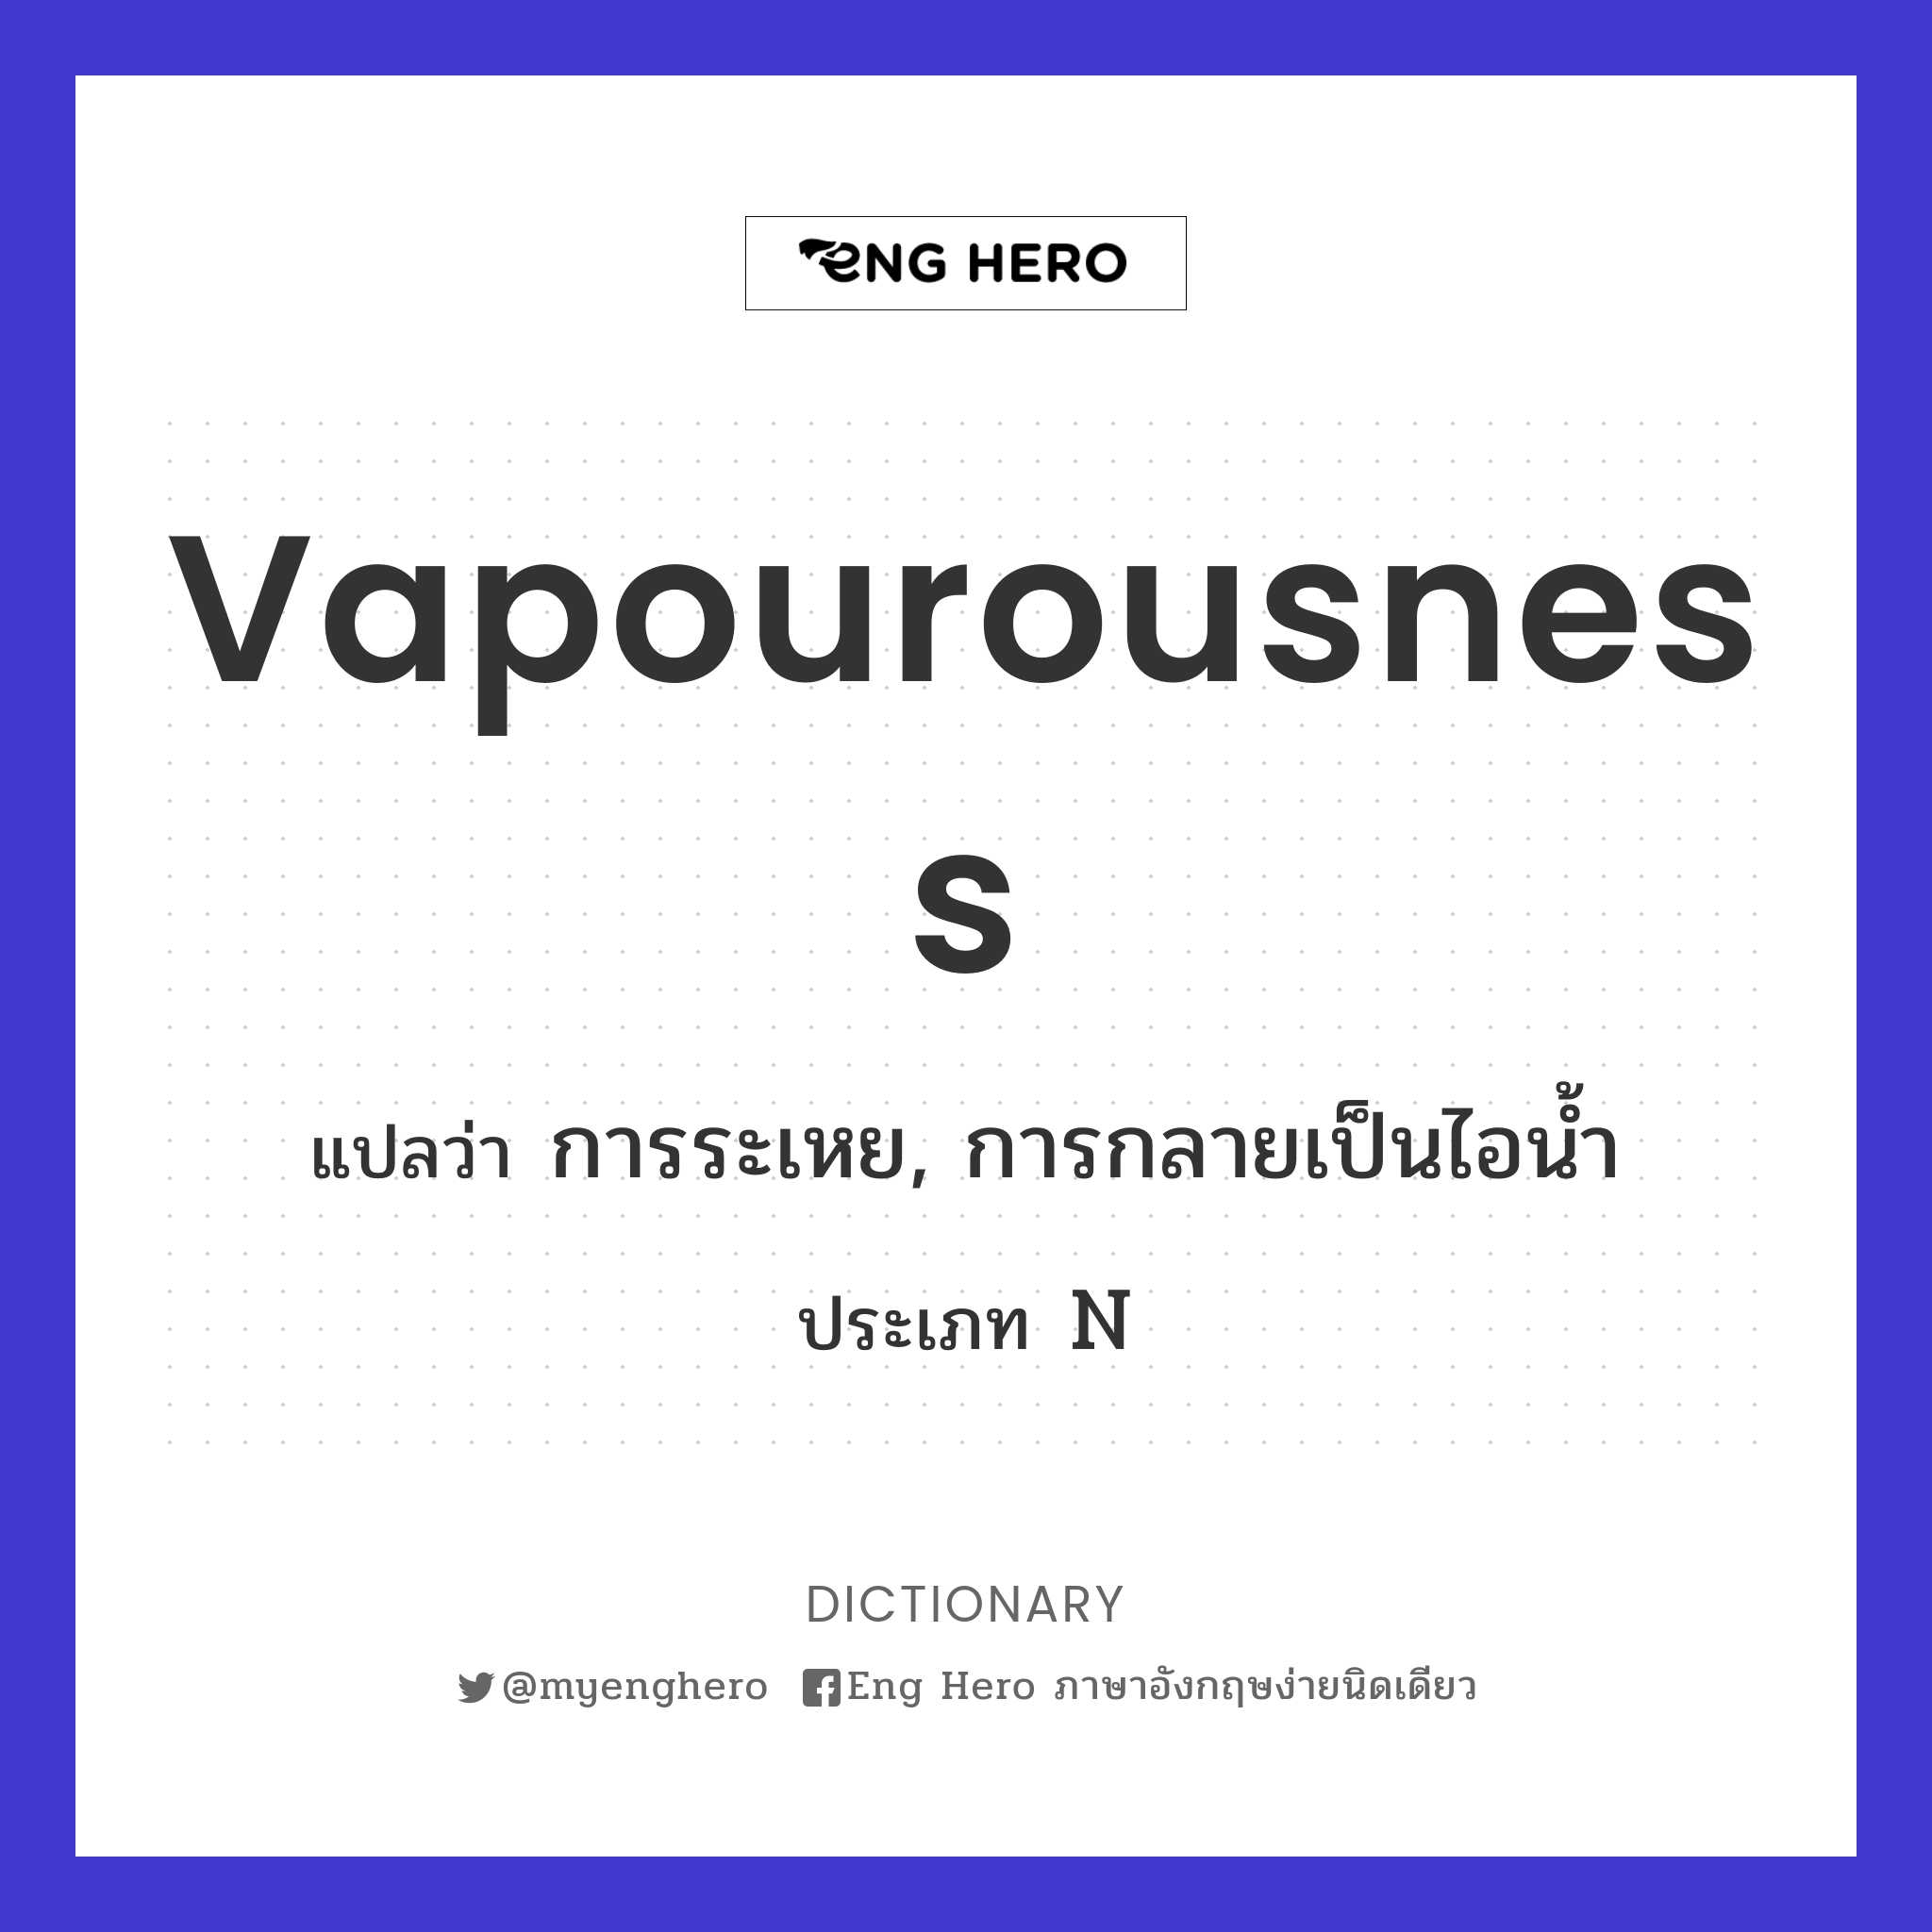 vapourousness